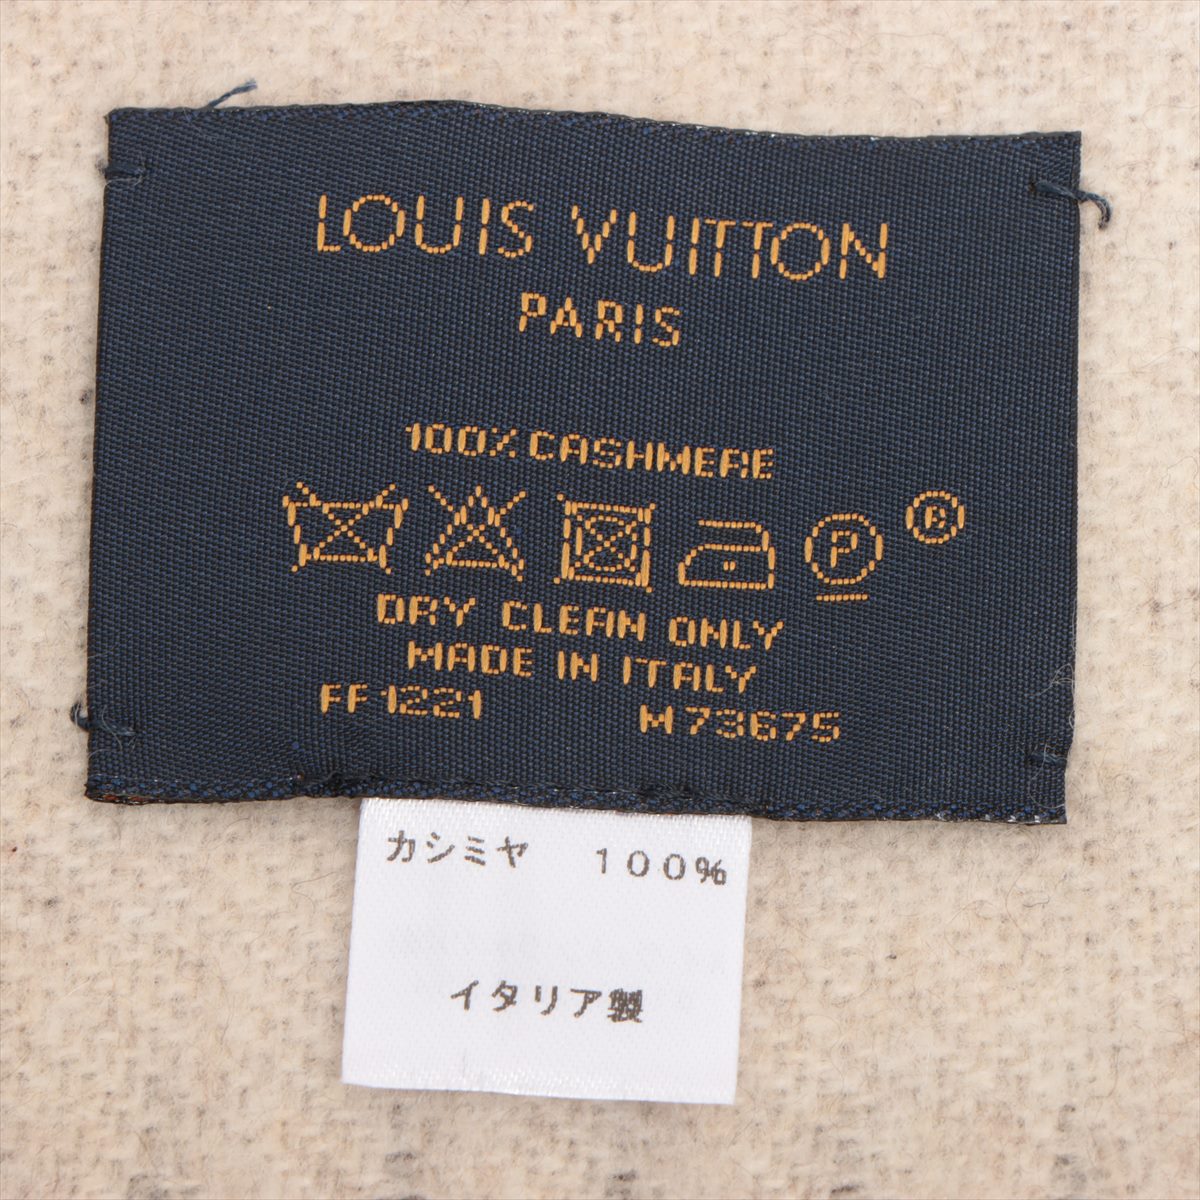 Louis Vuitton Cashmere Monogram Mini Reykjavik Scarf Brown